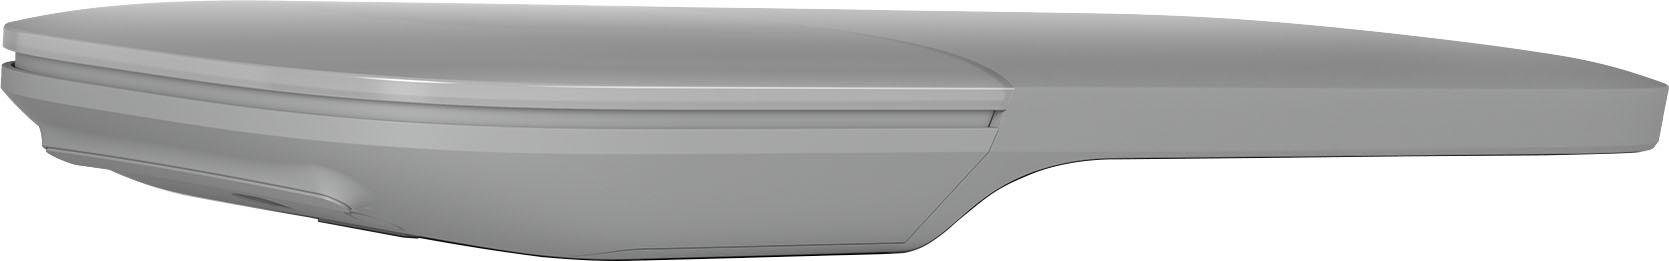 Microsoft Microsoft Surface Mouse Maus (Bluetooth) Arc grau CZV-00066